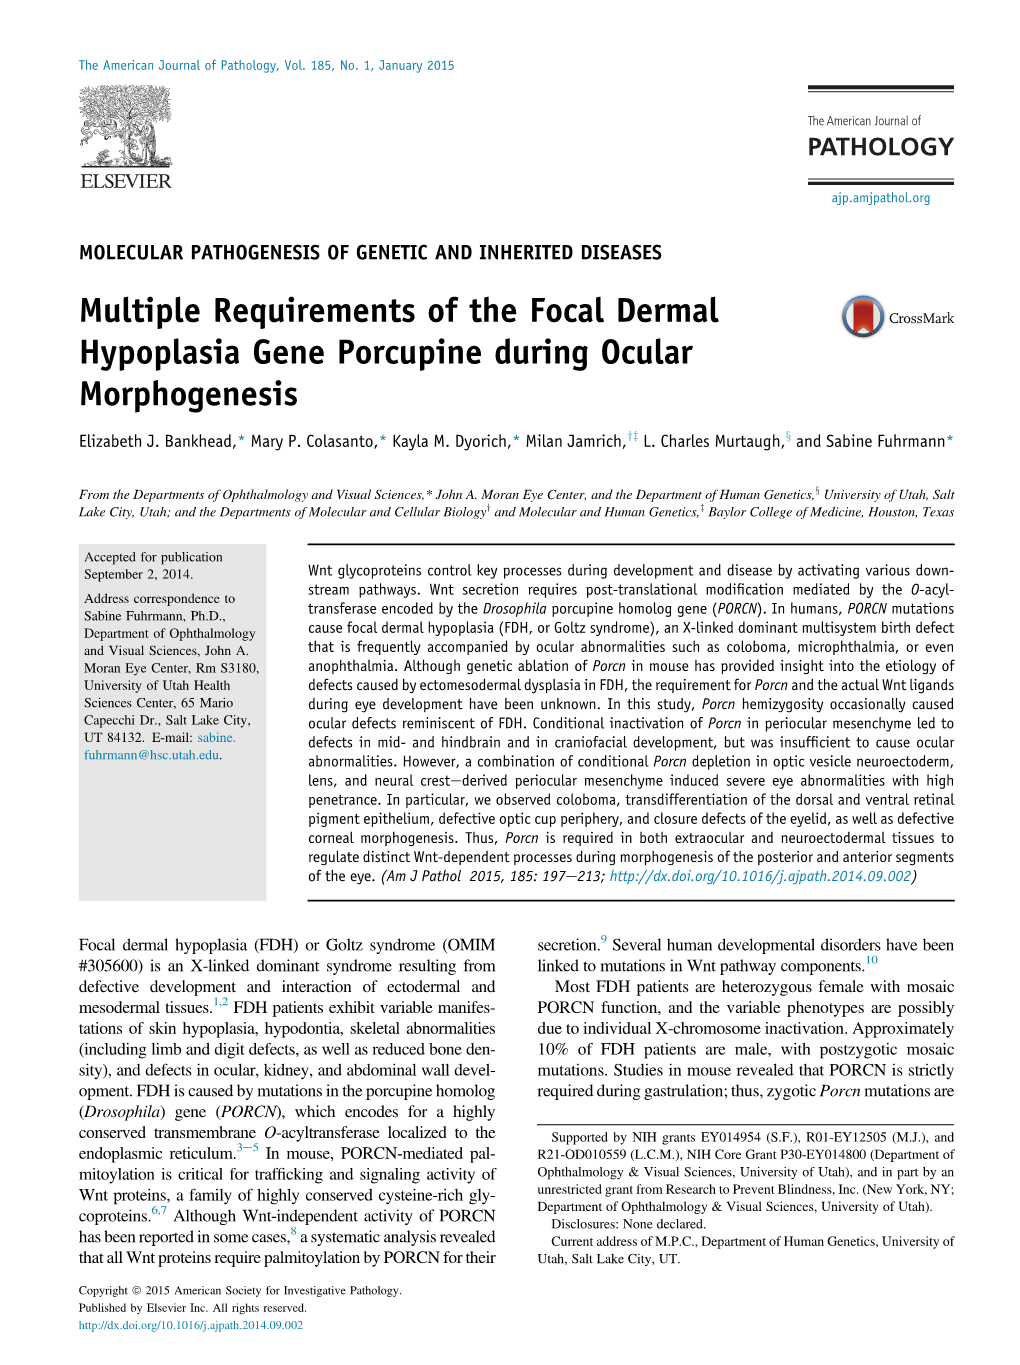 Multiple Requirements of the Focal Dermal Hypoplasia Gene Porcupine During Ocular Morphogenesis